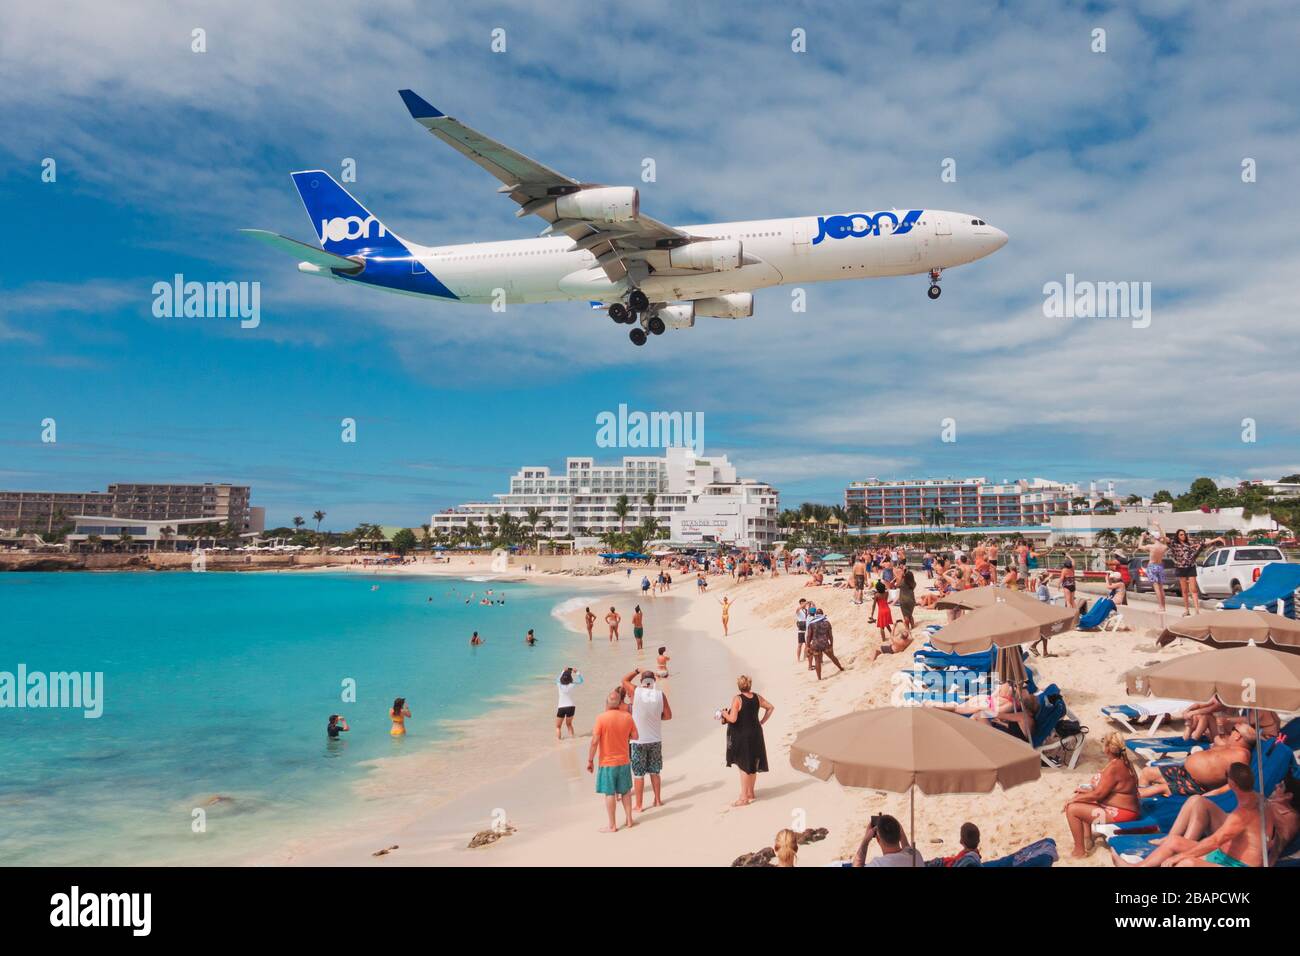 An Air France JOON Airbus A340-300 sails over tourists on Maho Beach, St. Maarten Stock Photo